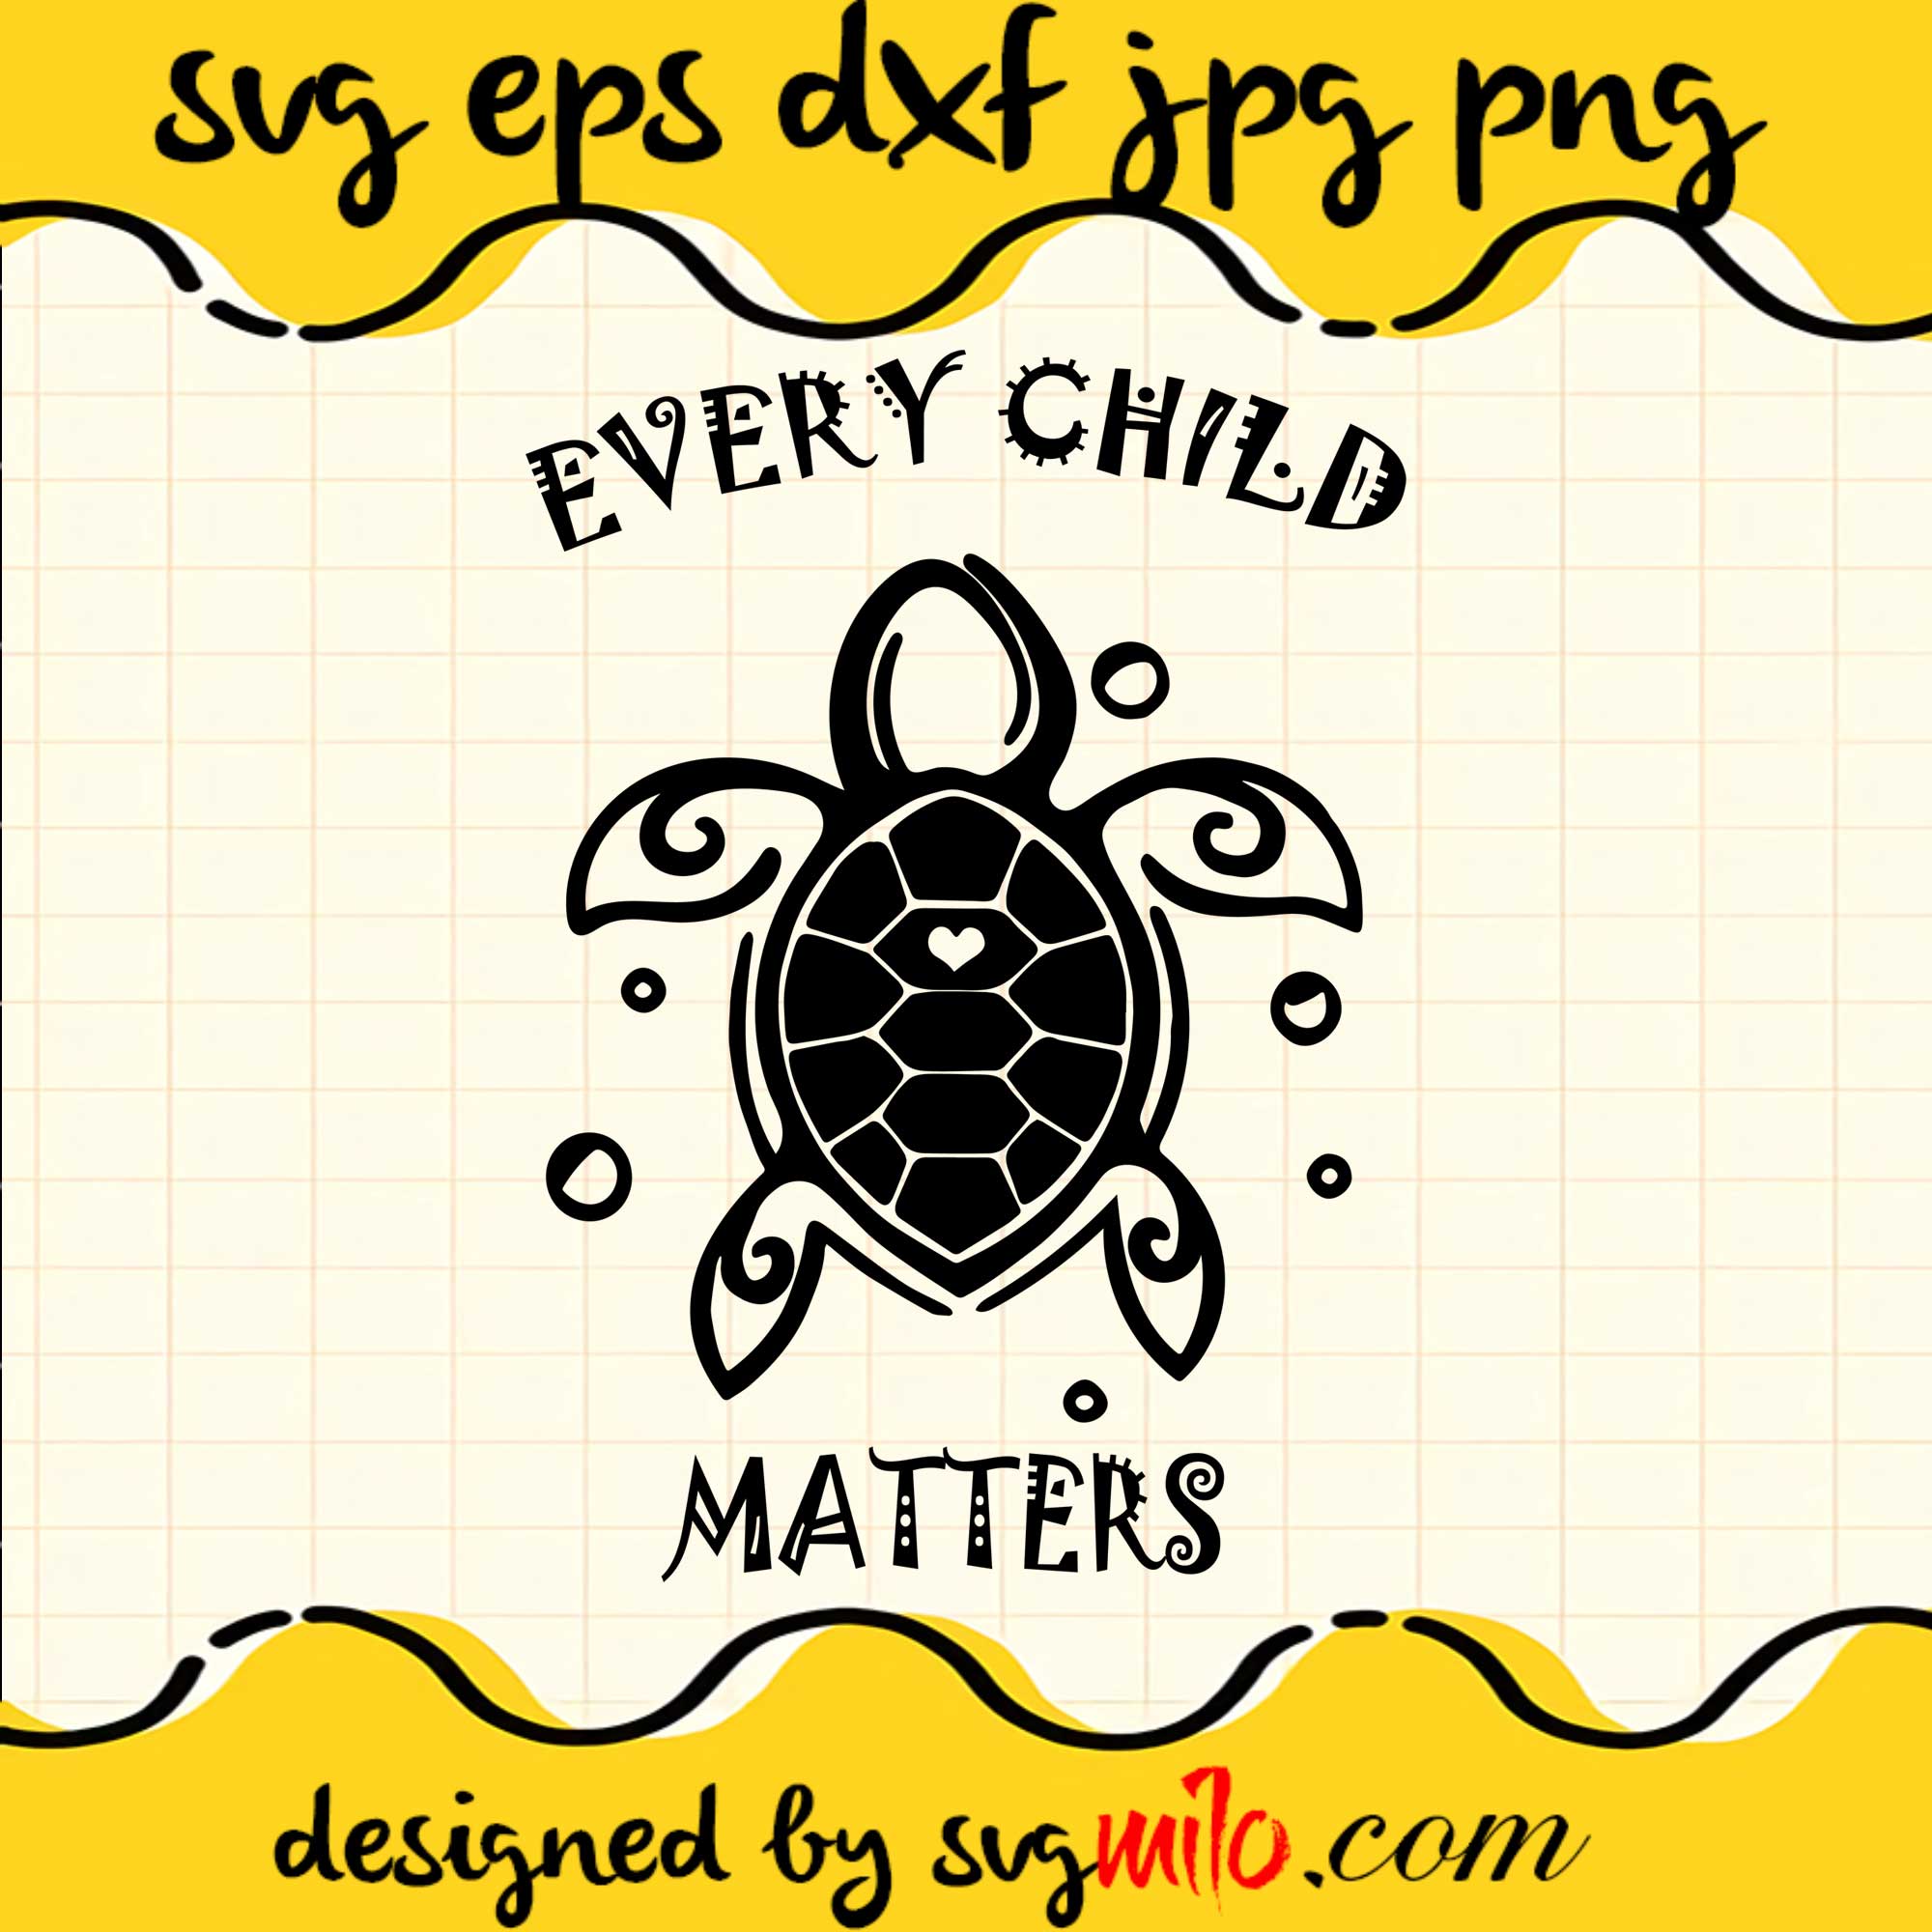 Every Child Matters Native American SVG Cut Files For Cricut Silhouette,Premium Quality SVG - SVGMILO